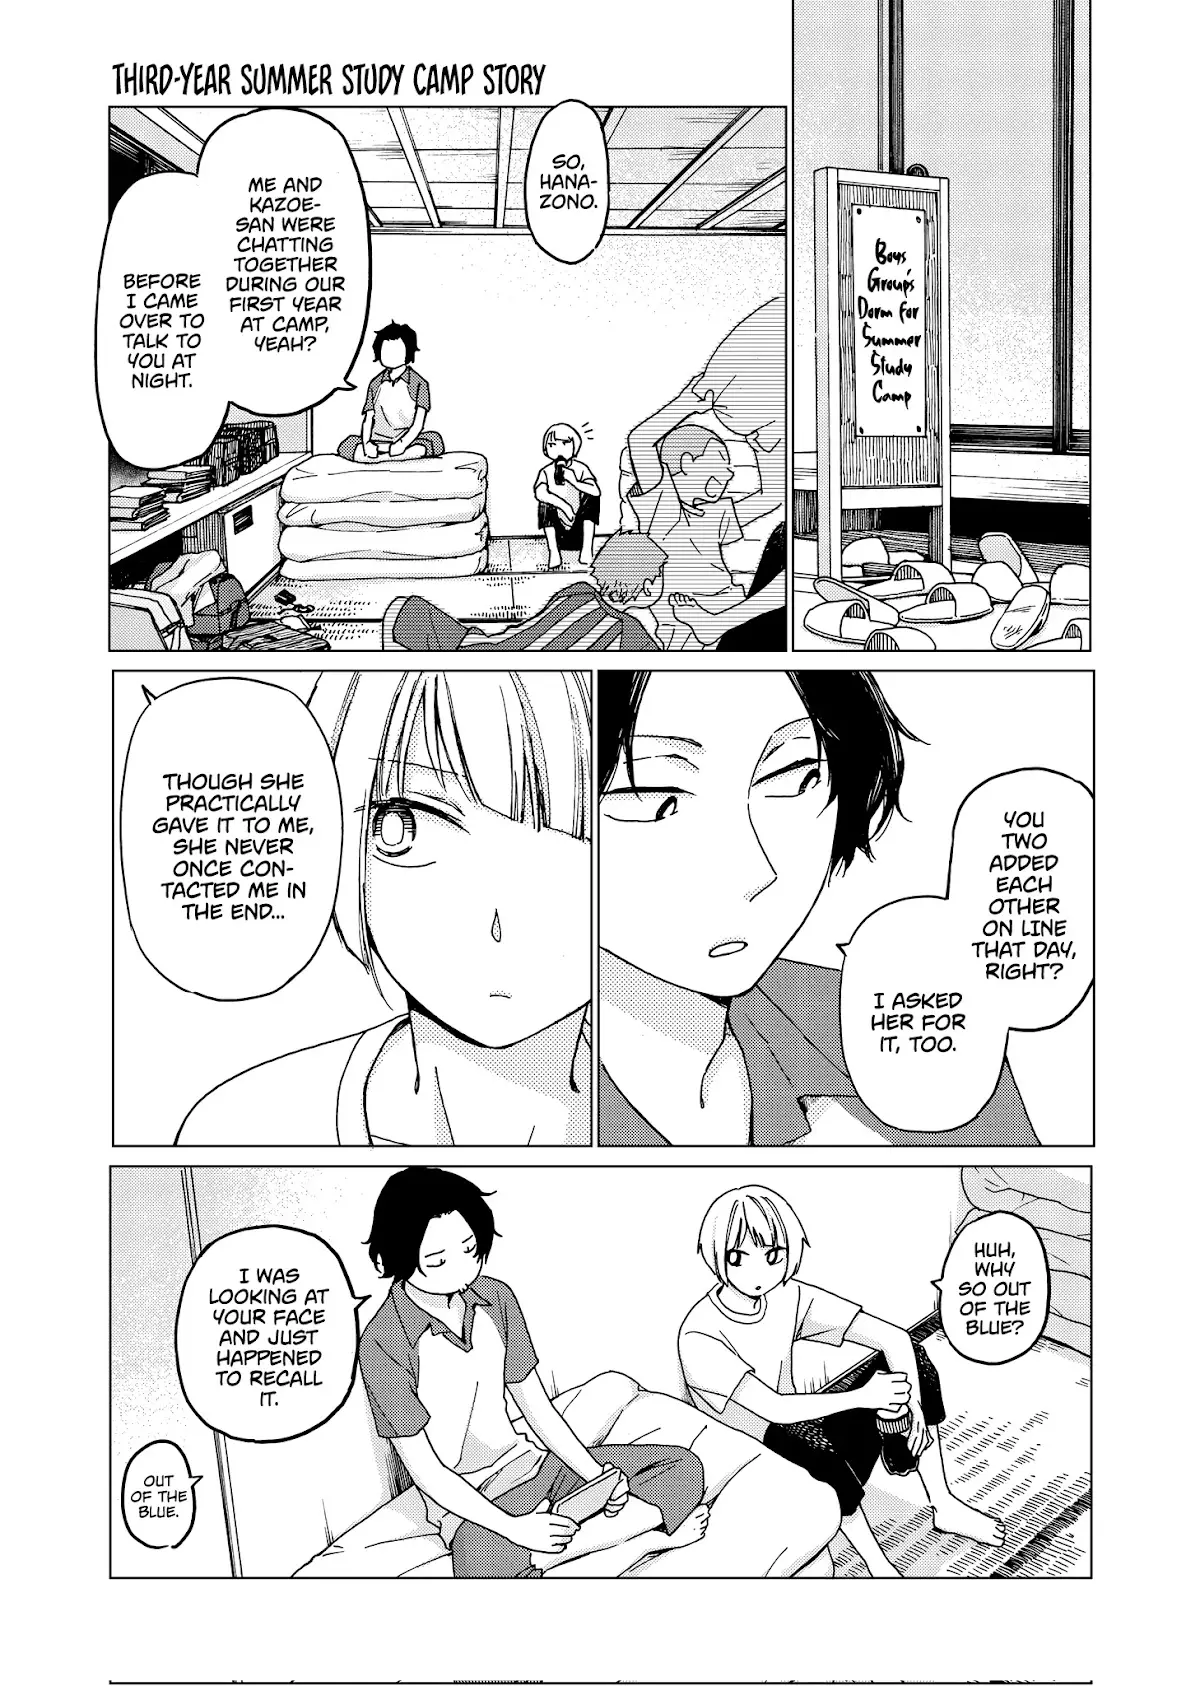 Hanazono And Kazoe's Bizzare After School Rendezvous - 32 page 1-f32b63e0